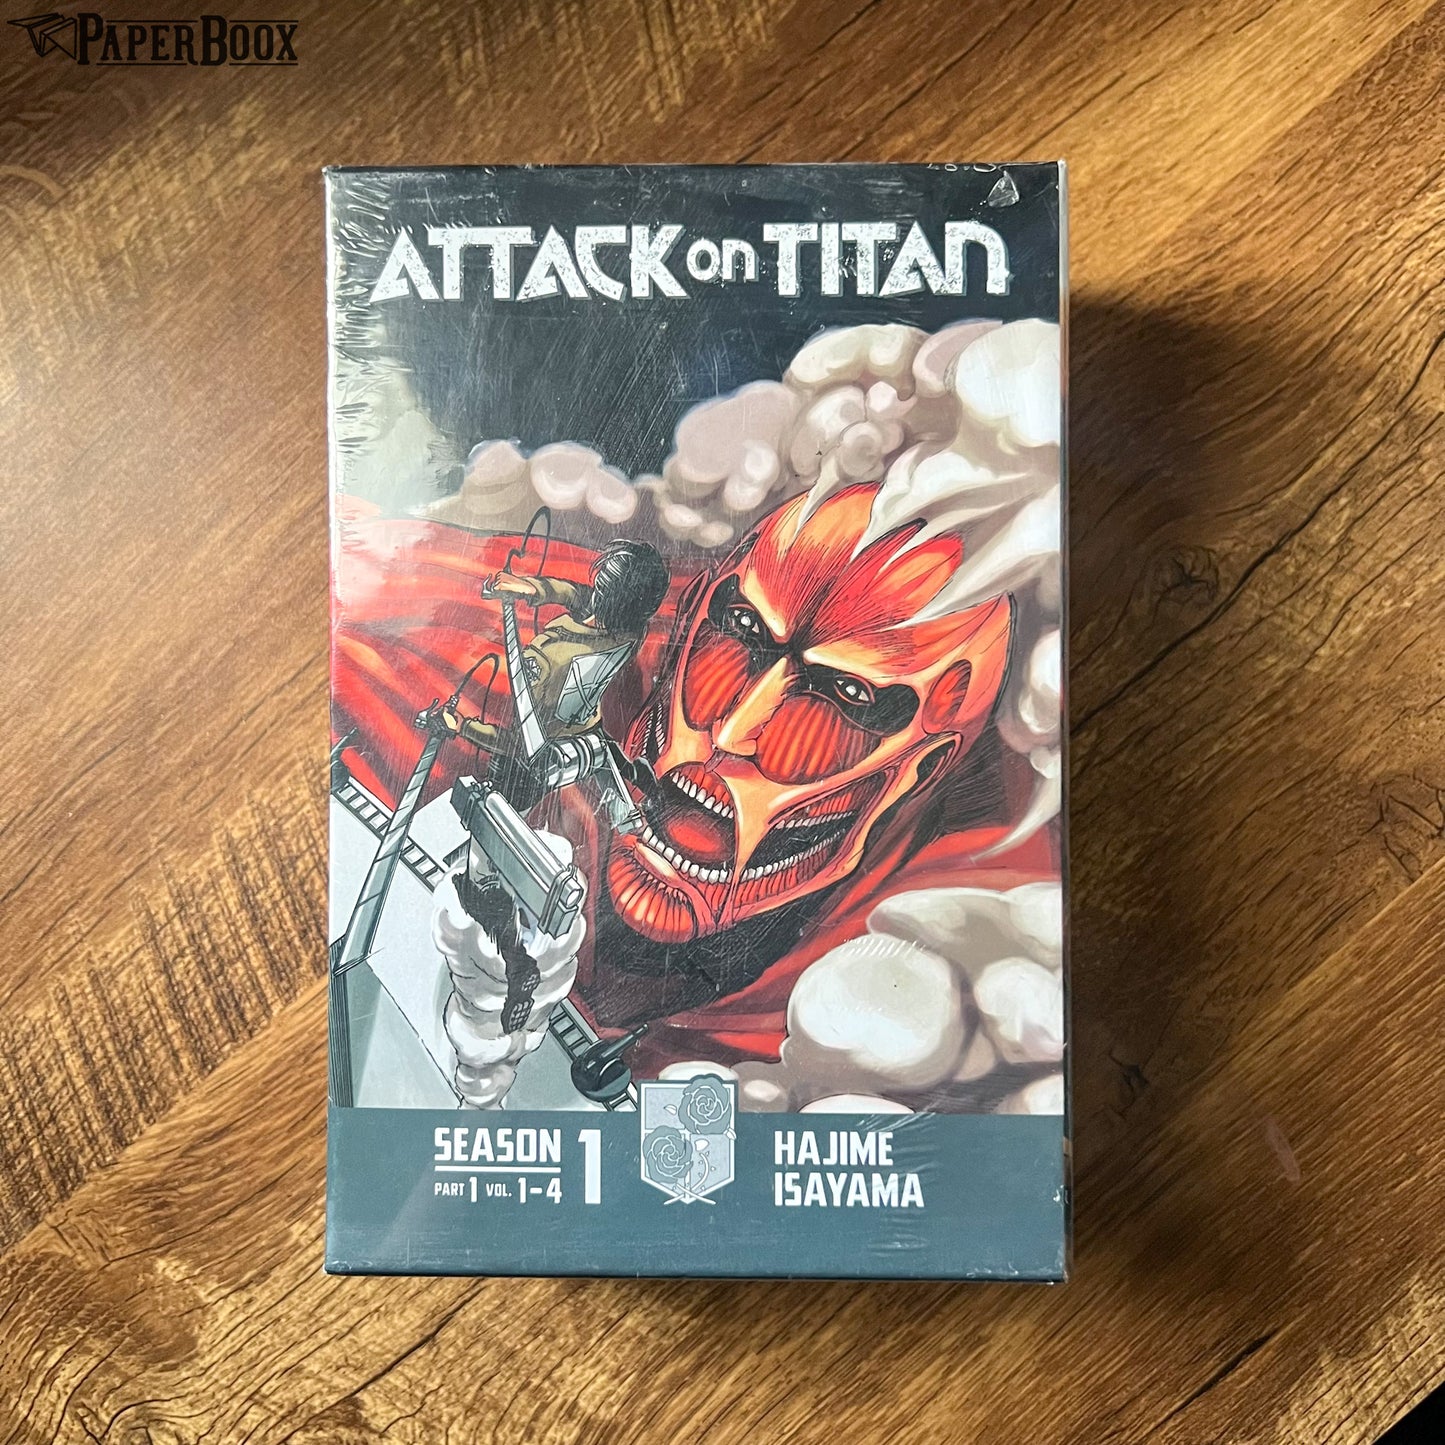  Attack on Titan Season 1 Part 1 Manga Box Set (Attack